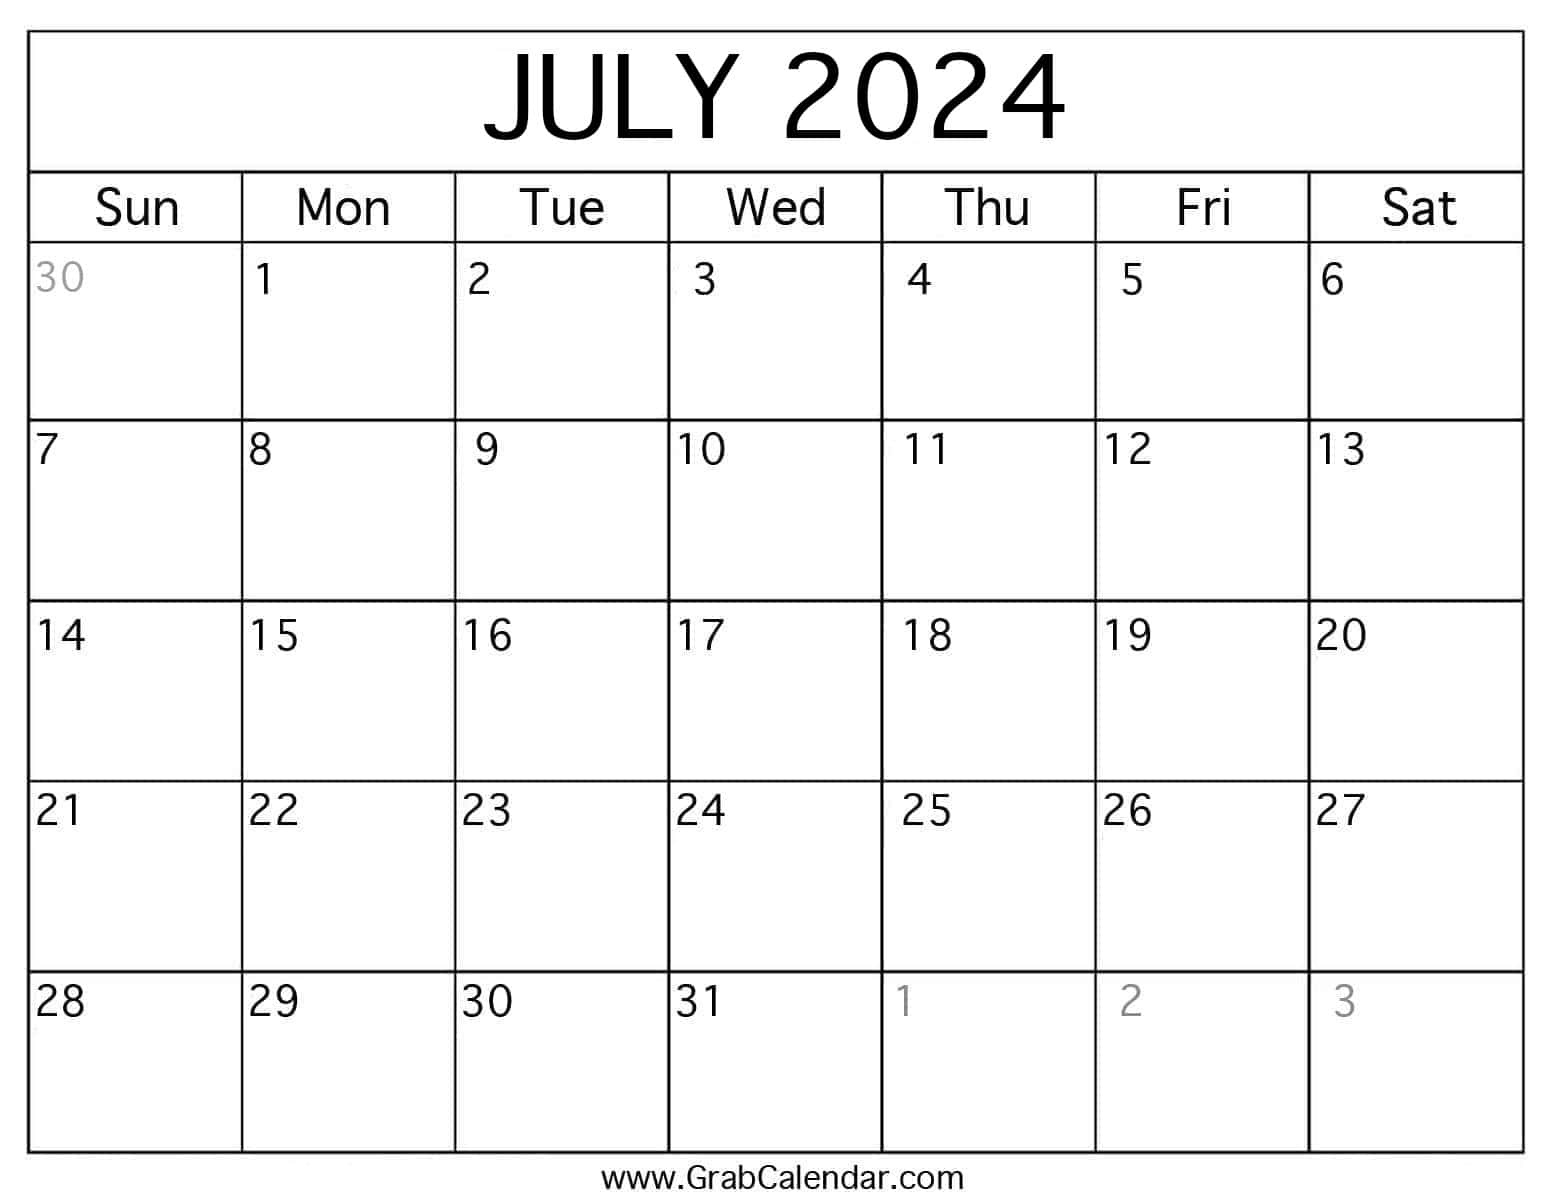 Printable July 2024 Calendar regarding Show July 2024 Calendar